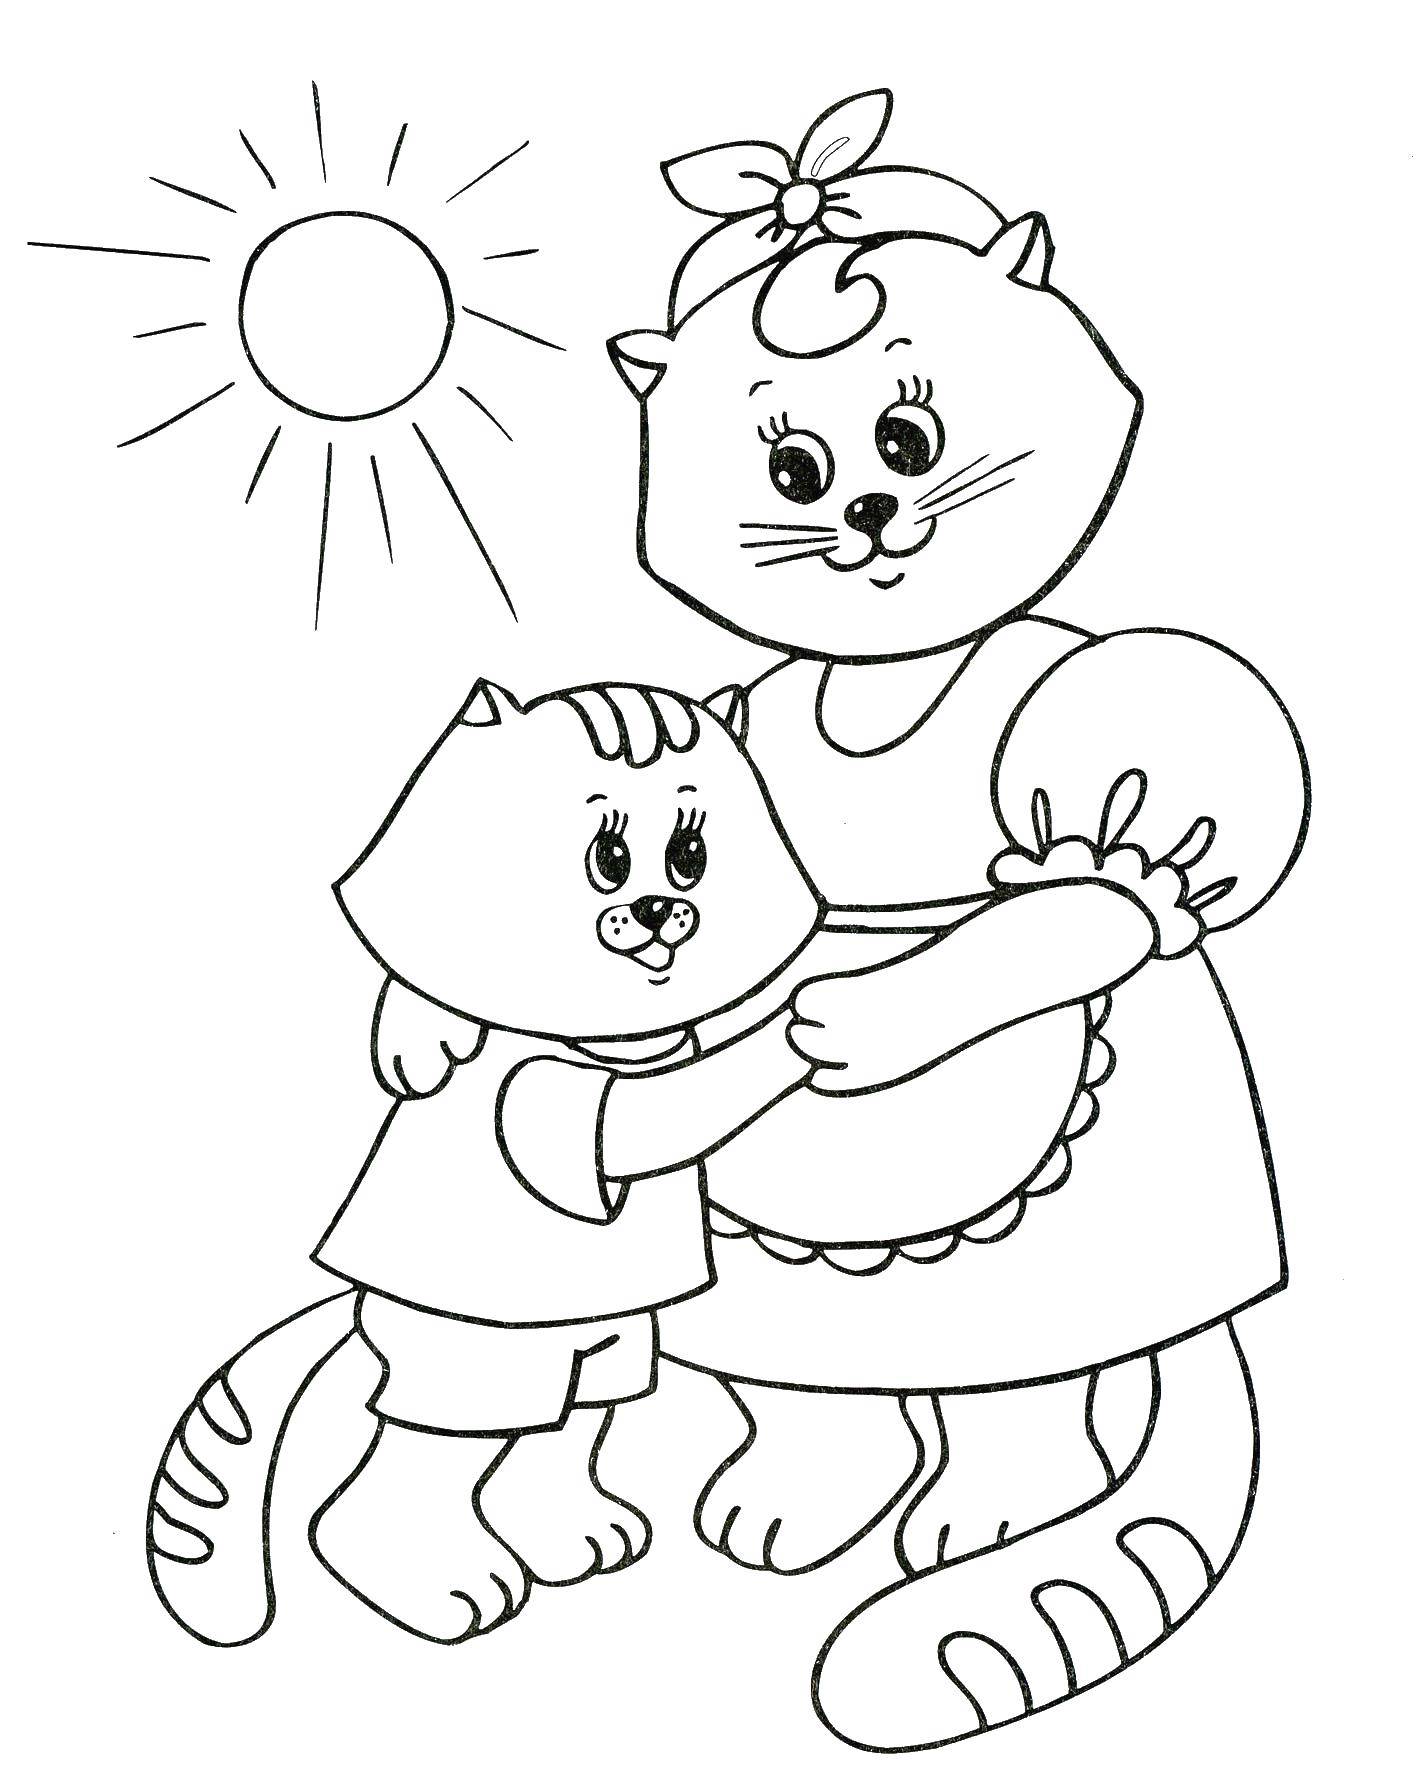 Раскраска с мамой и ребенком кошкой котенком под солнцем в фартуке (мама, кошка, фартук)